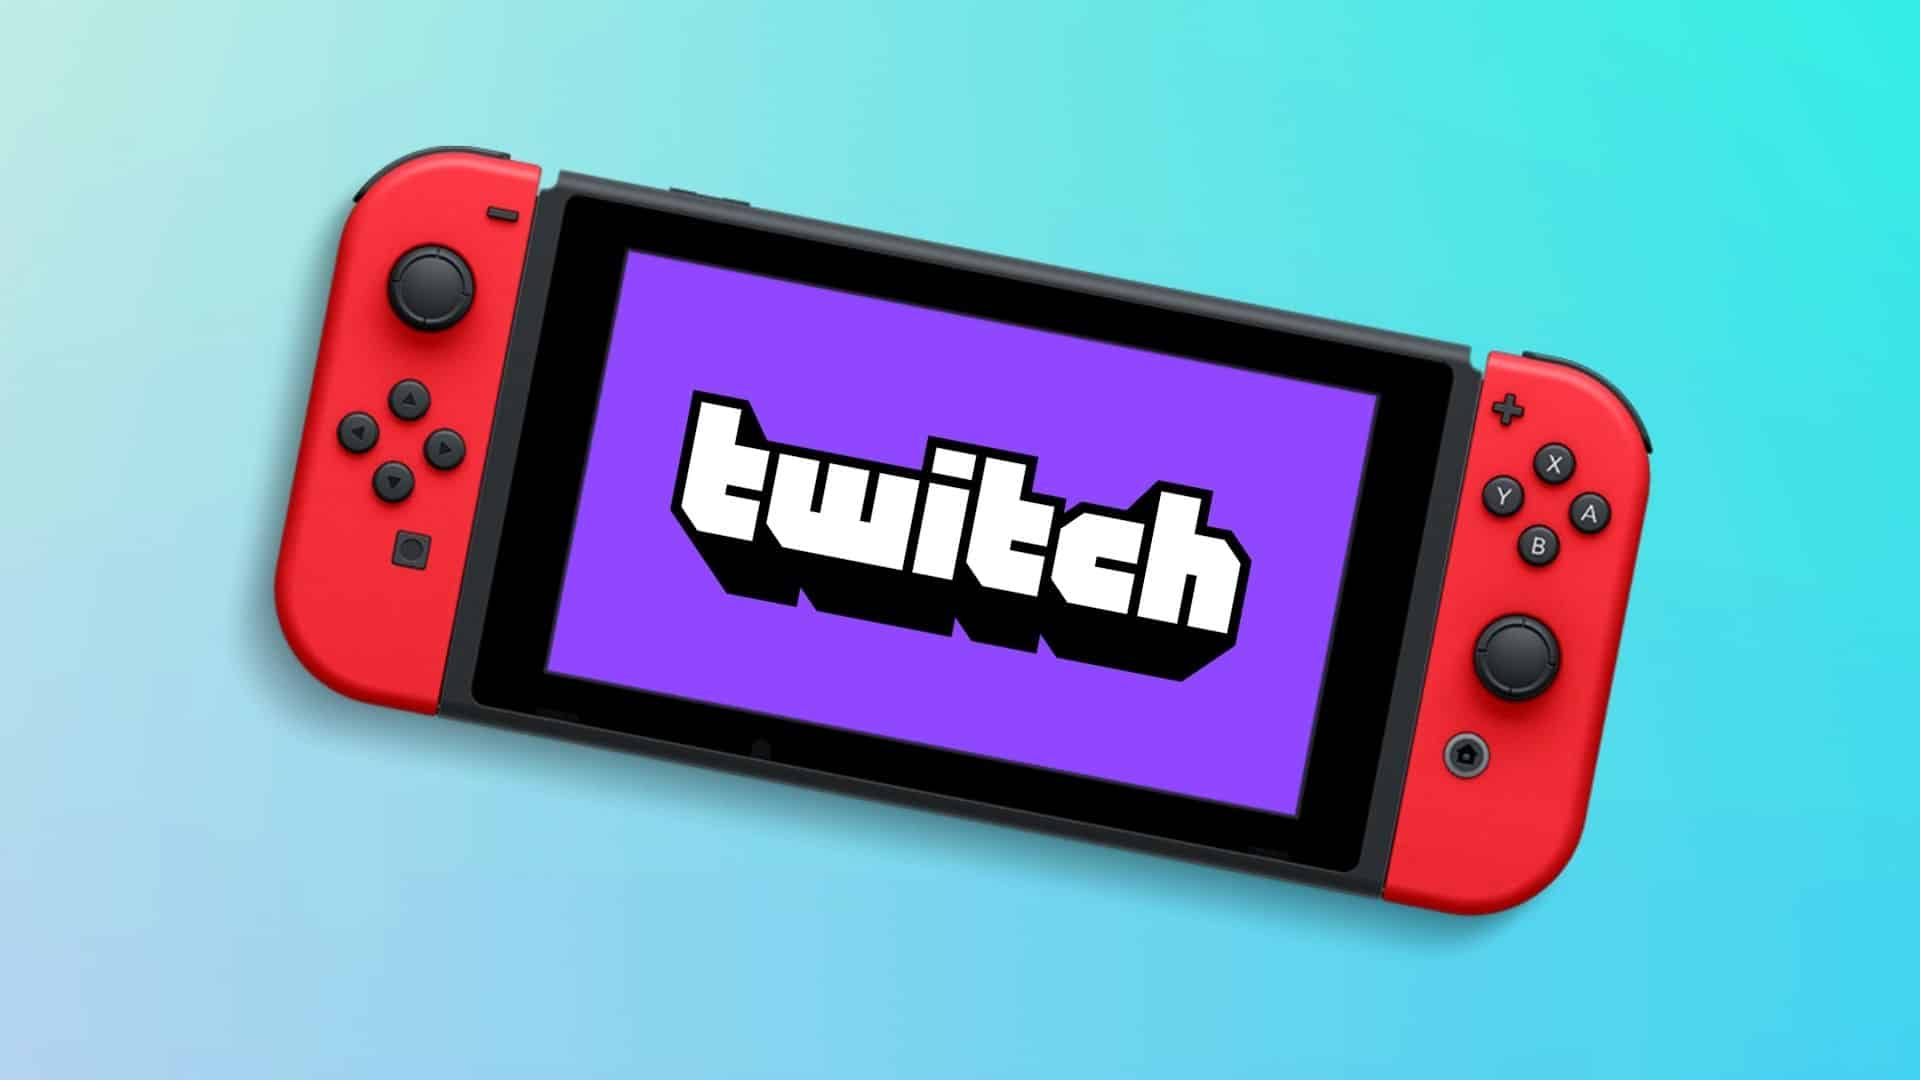 Twitch no Switch: baixe o novo app da Twitch para o Nintendo Switch